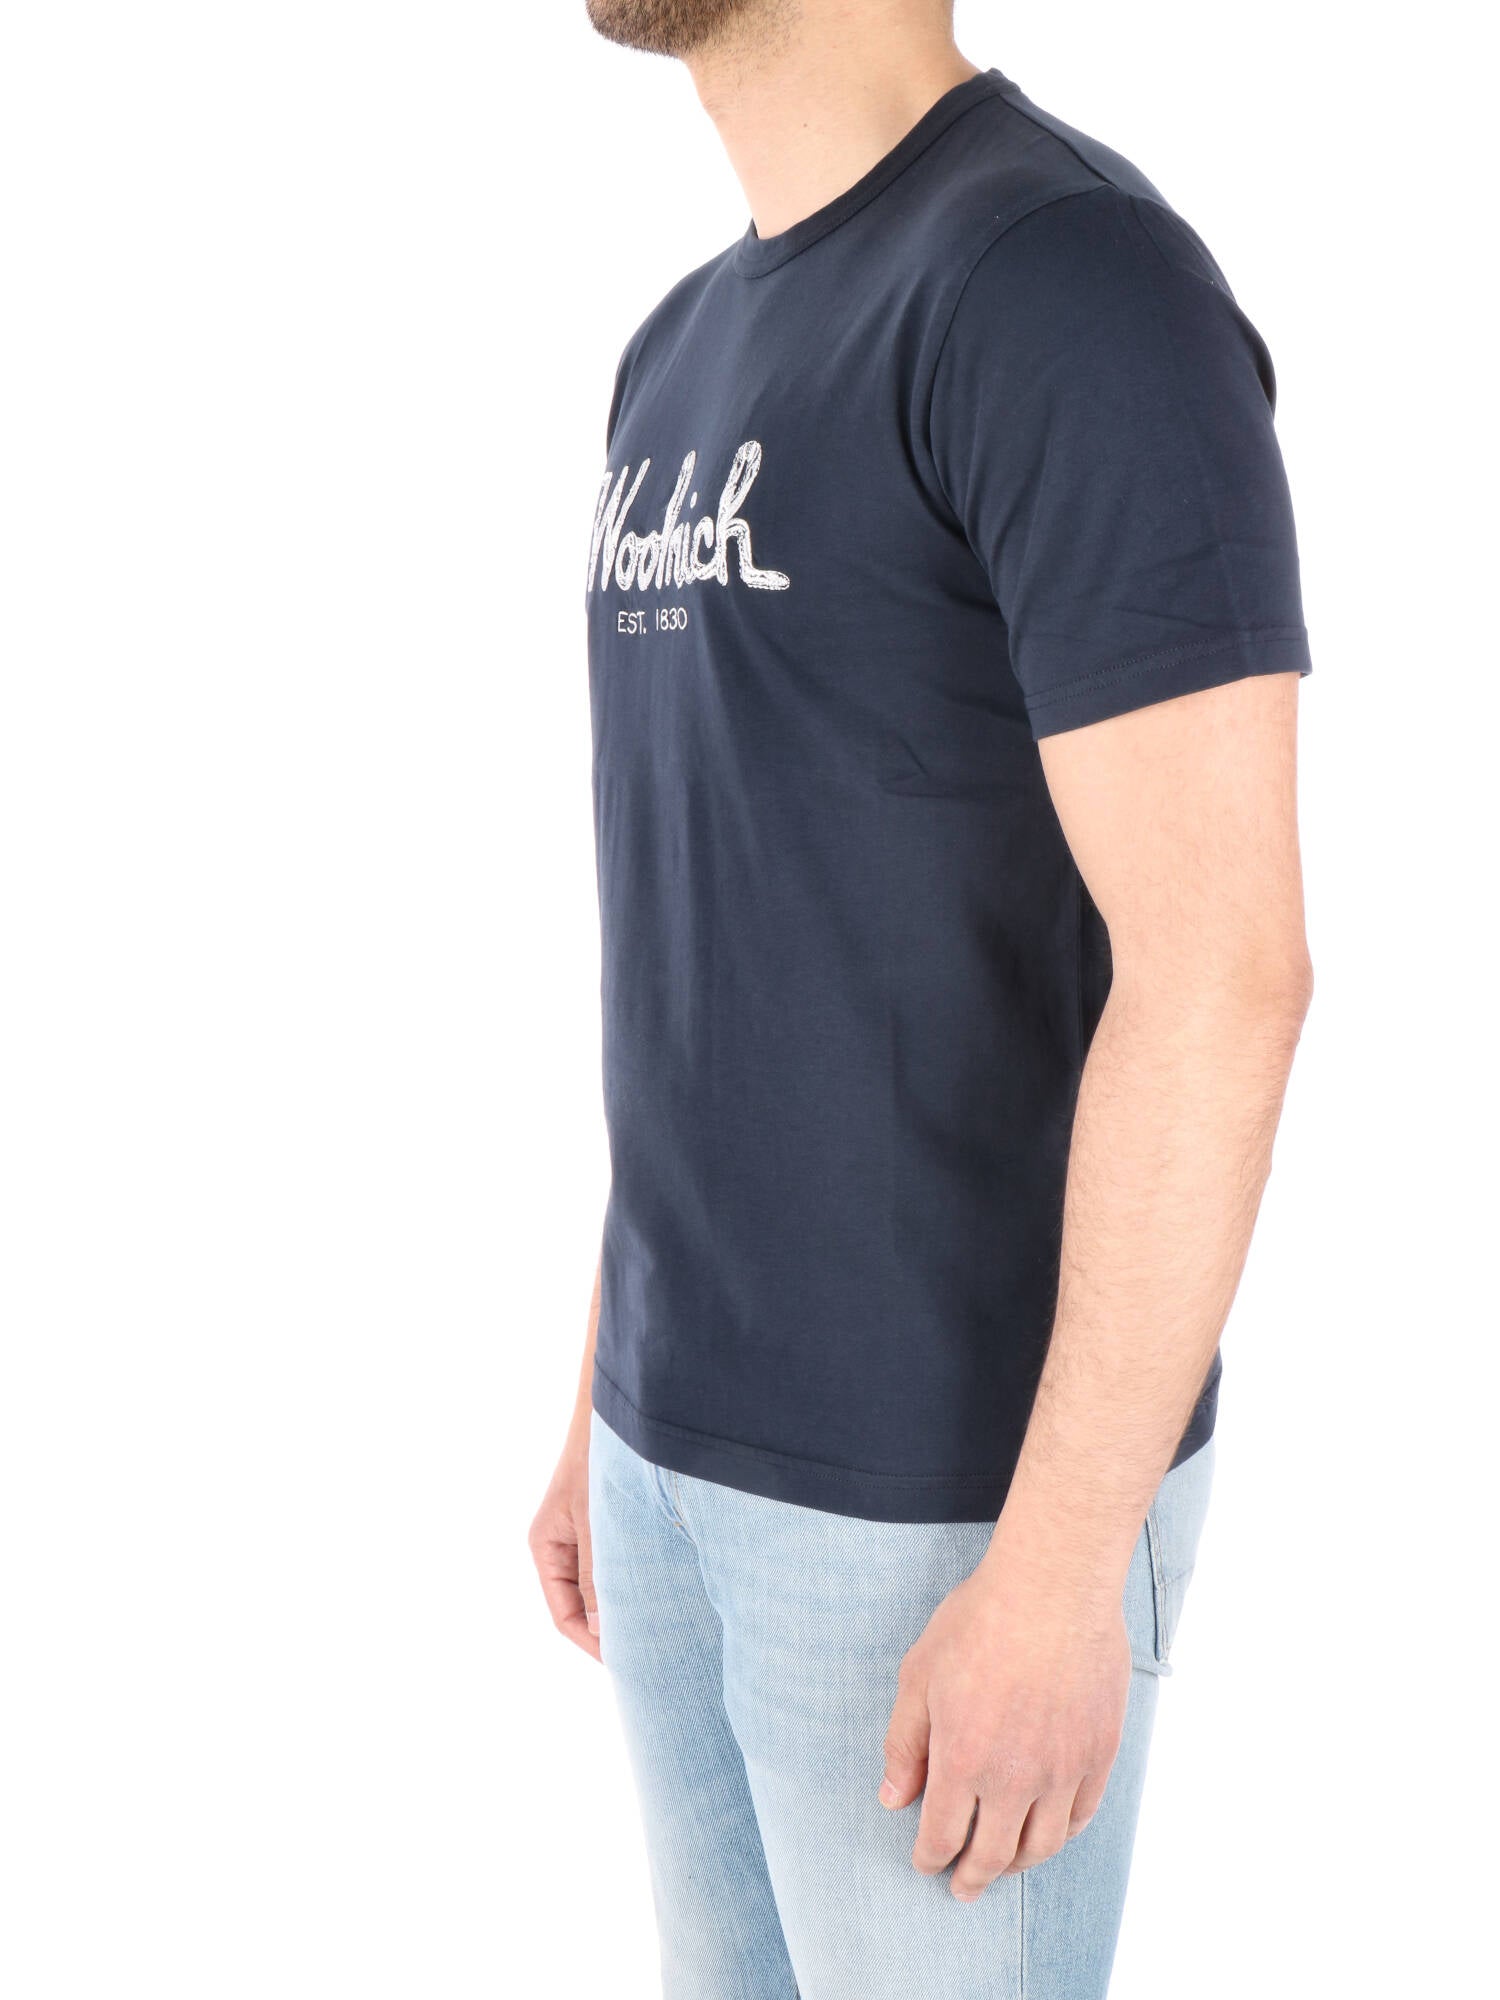 Woolrich t-shirt uomo blu con logo